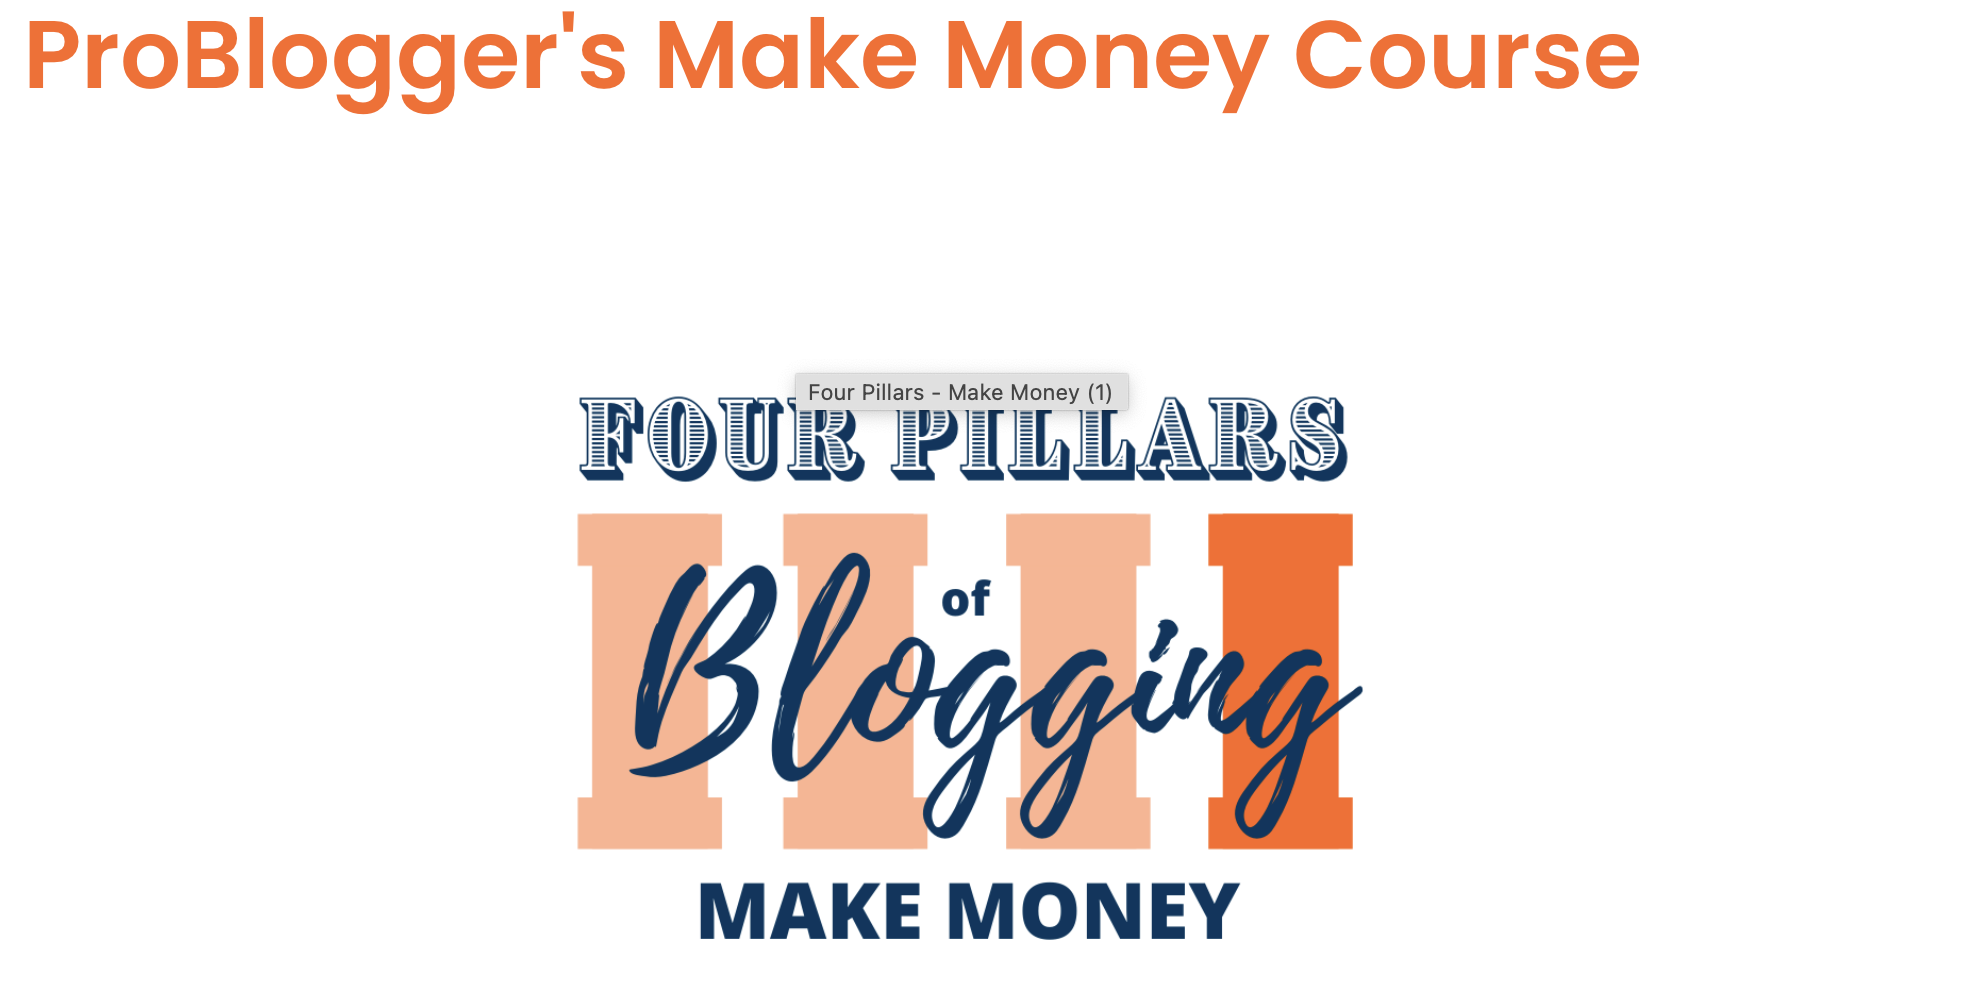 Four Pillars of Blogging - The Problogger